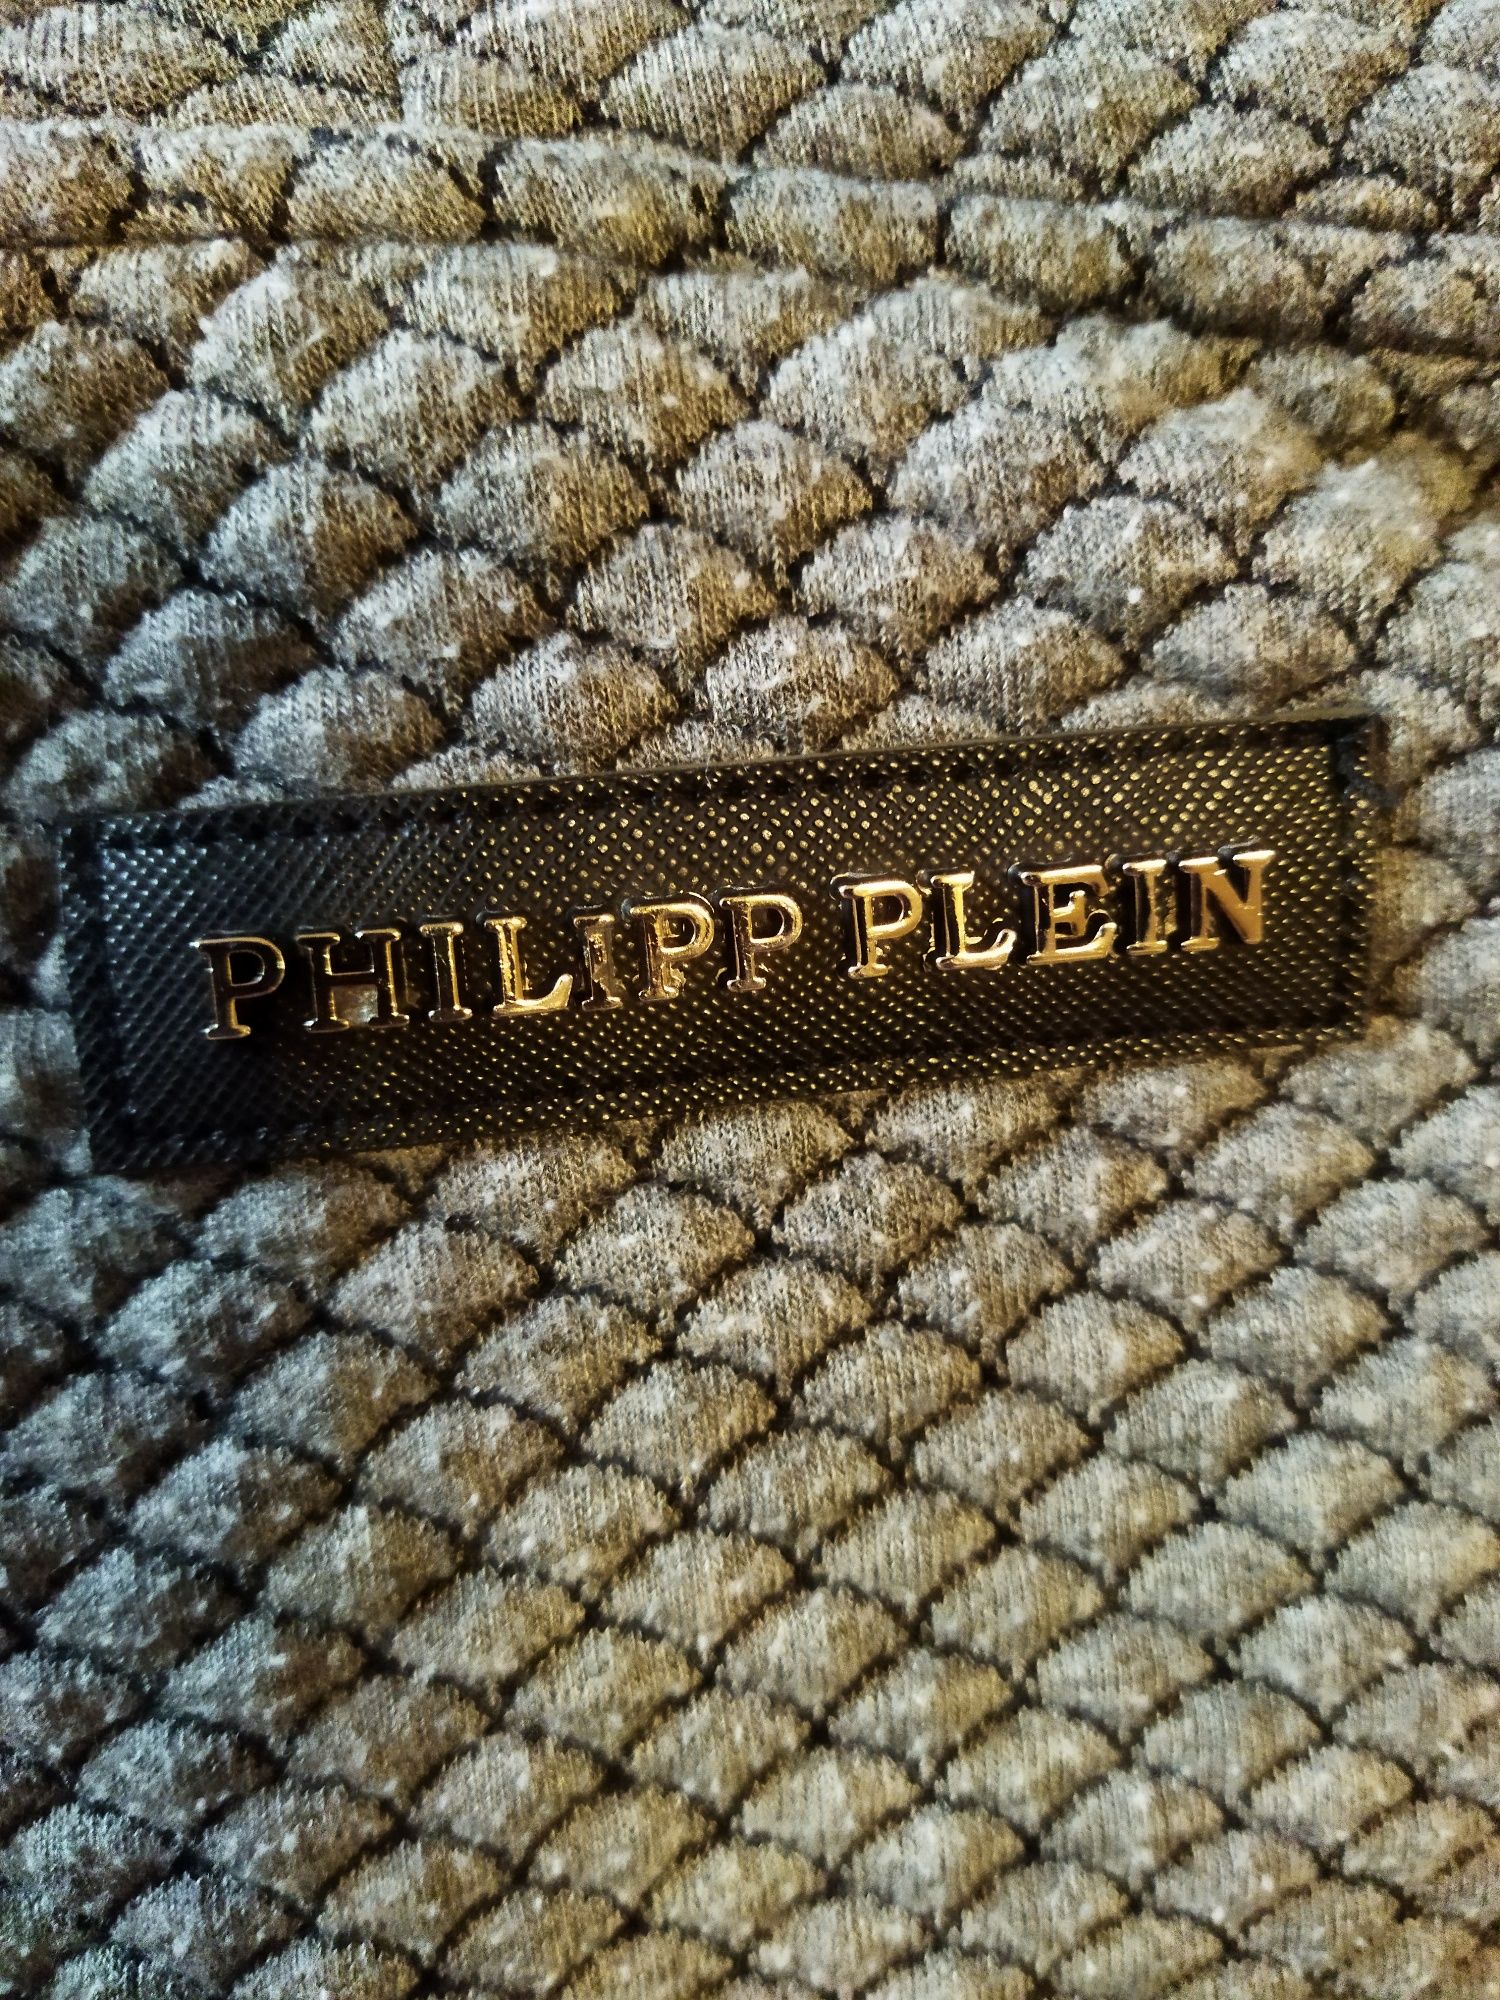 Bluza Philip playn s/m